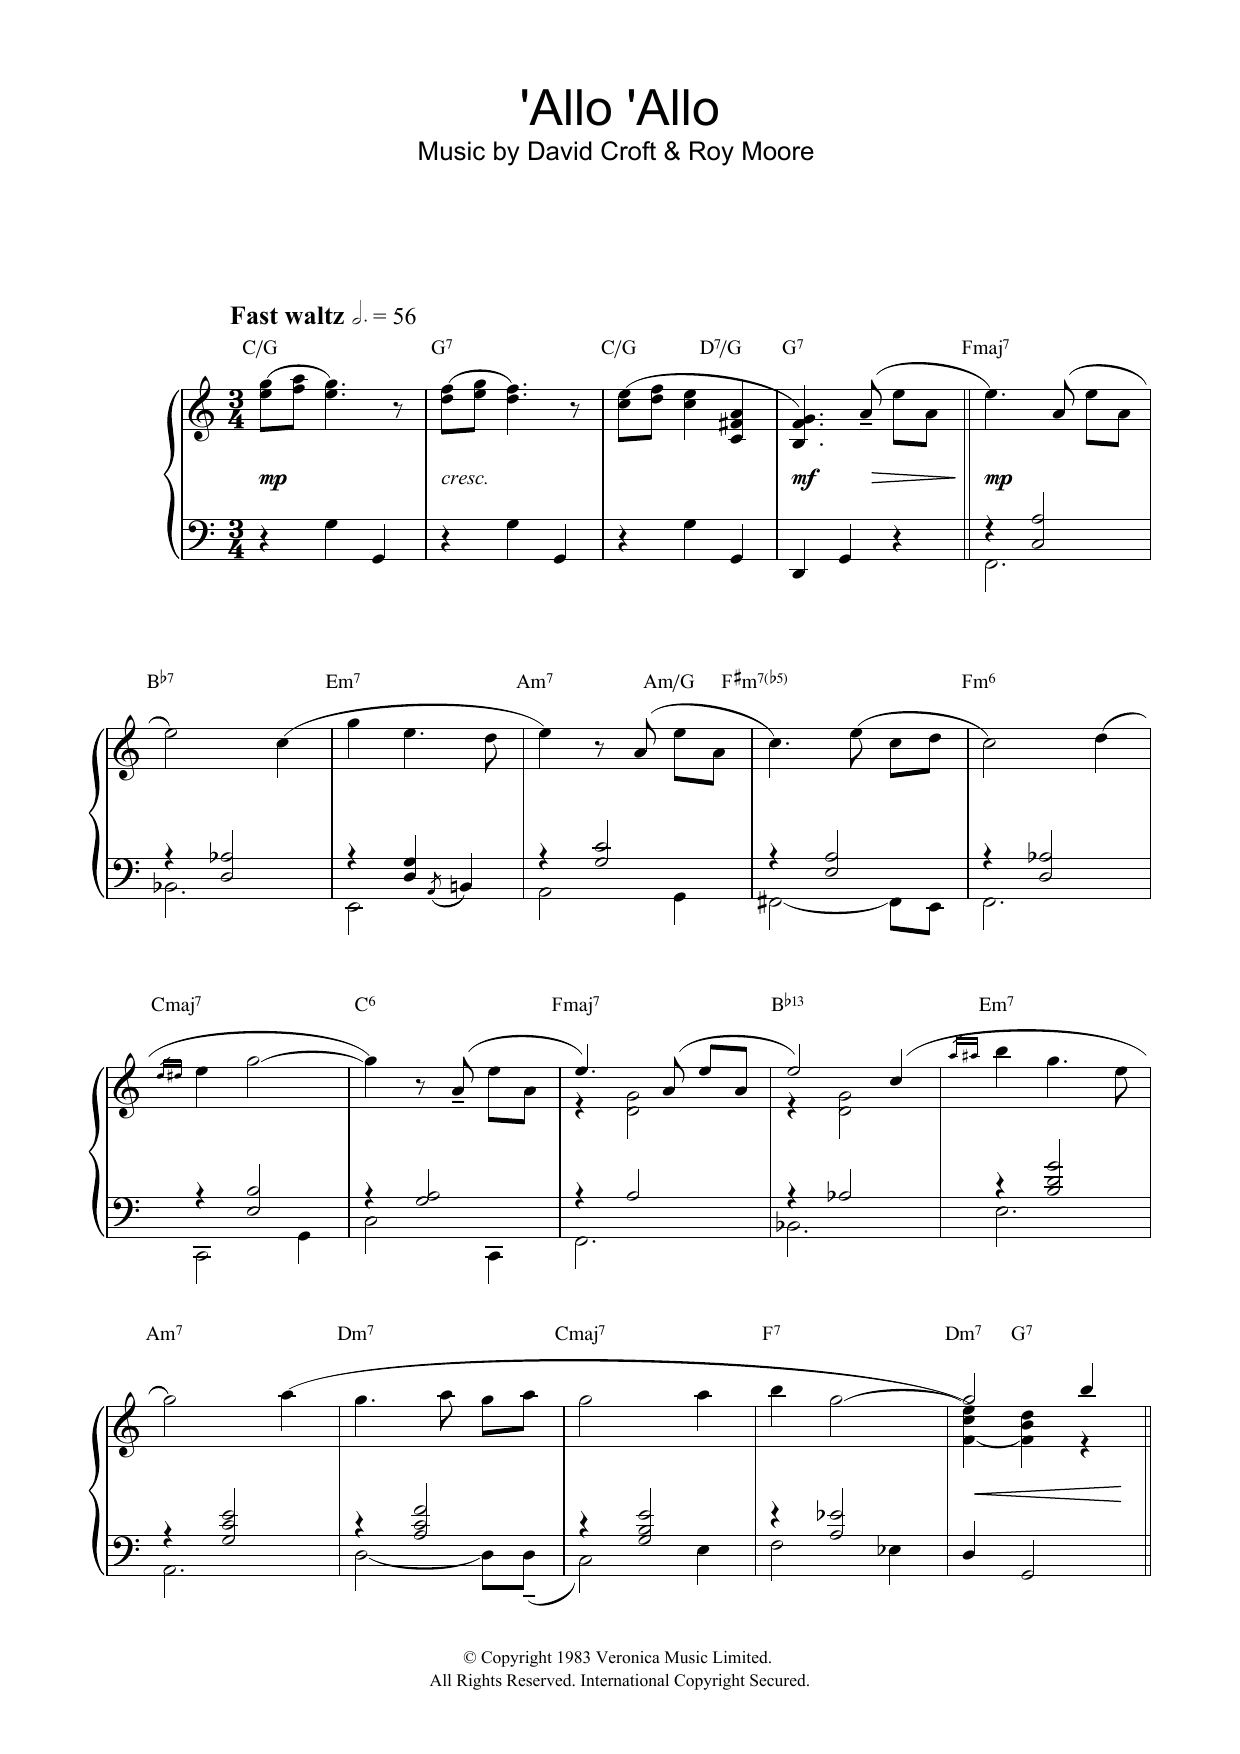 David Croft 'Allo 'Allo Sheet Music Notes & Chords for Piano - Download or Print PDF